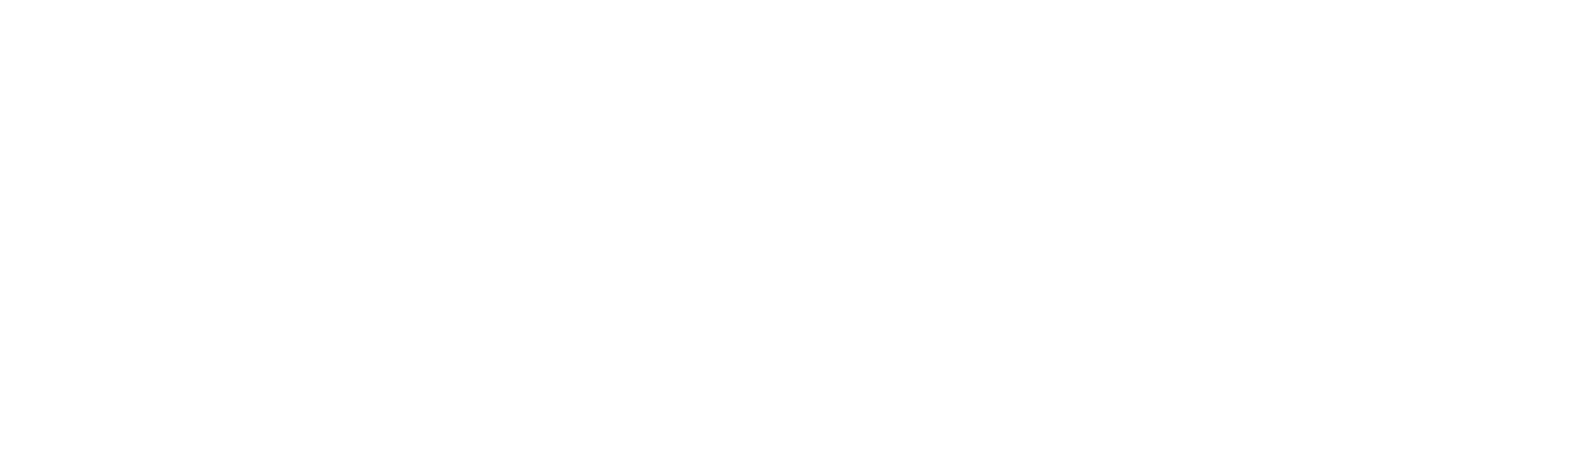 Kite Realty logo pour fonds sombres (PNG transparent)